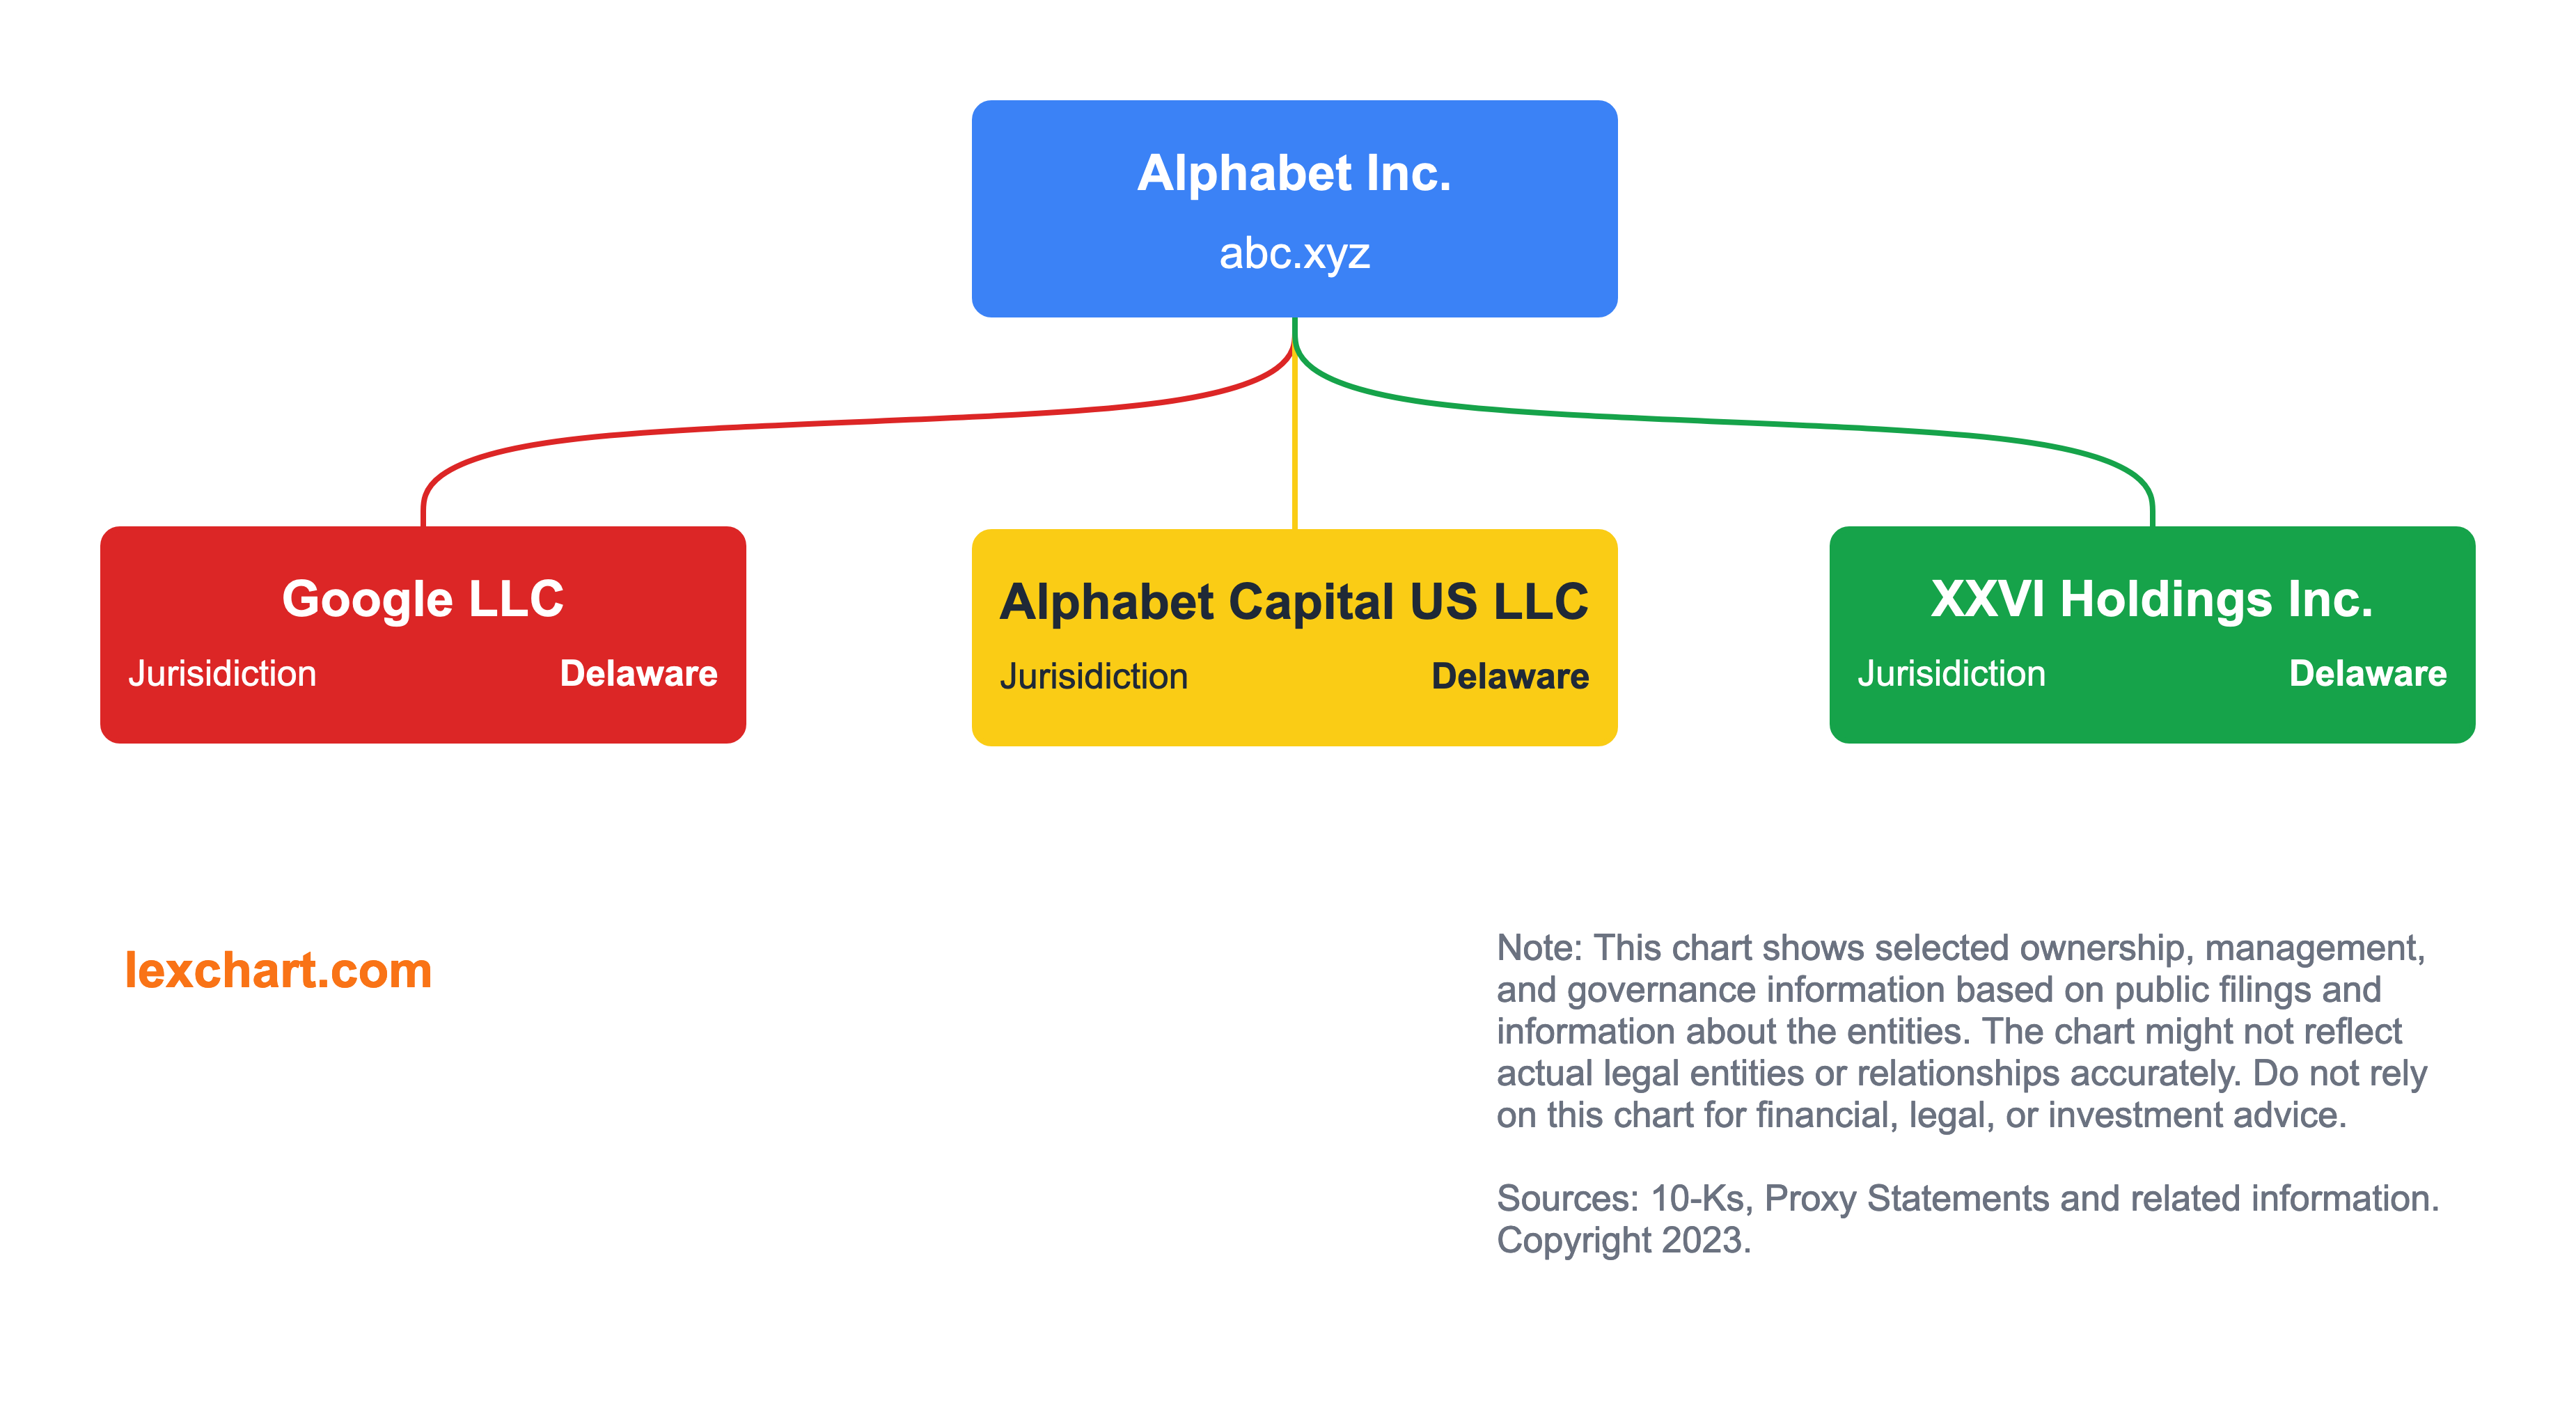 Alphabet Subsidiaries for 2022